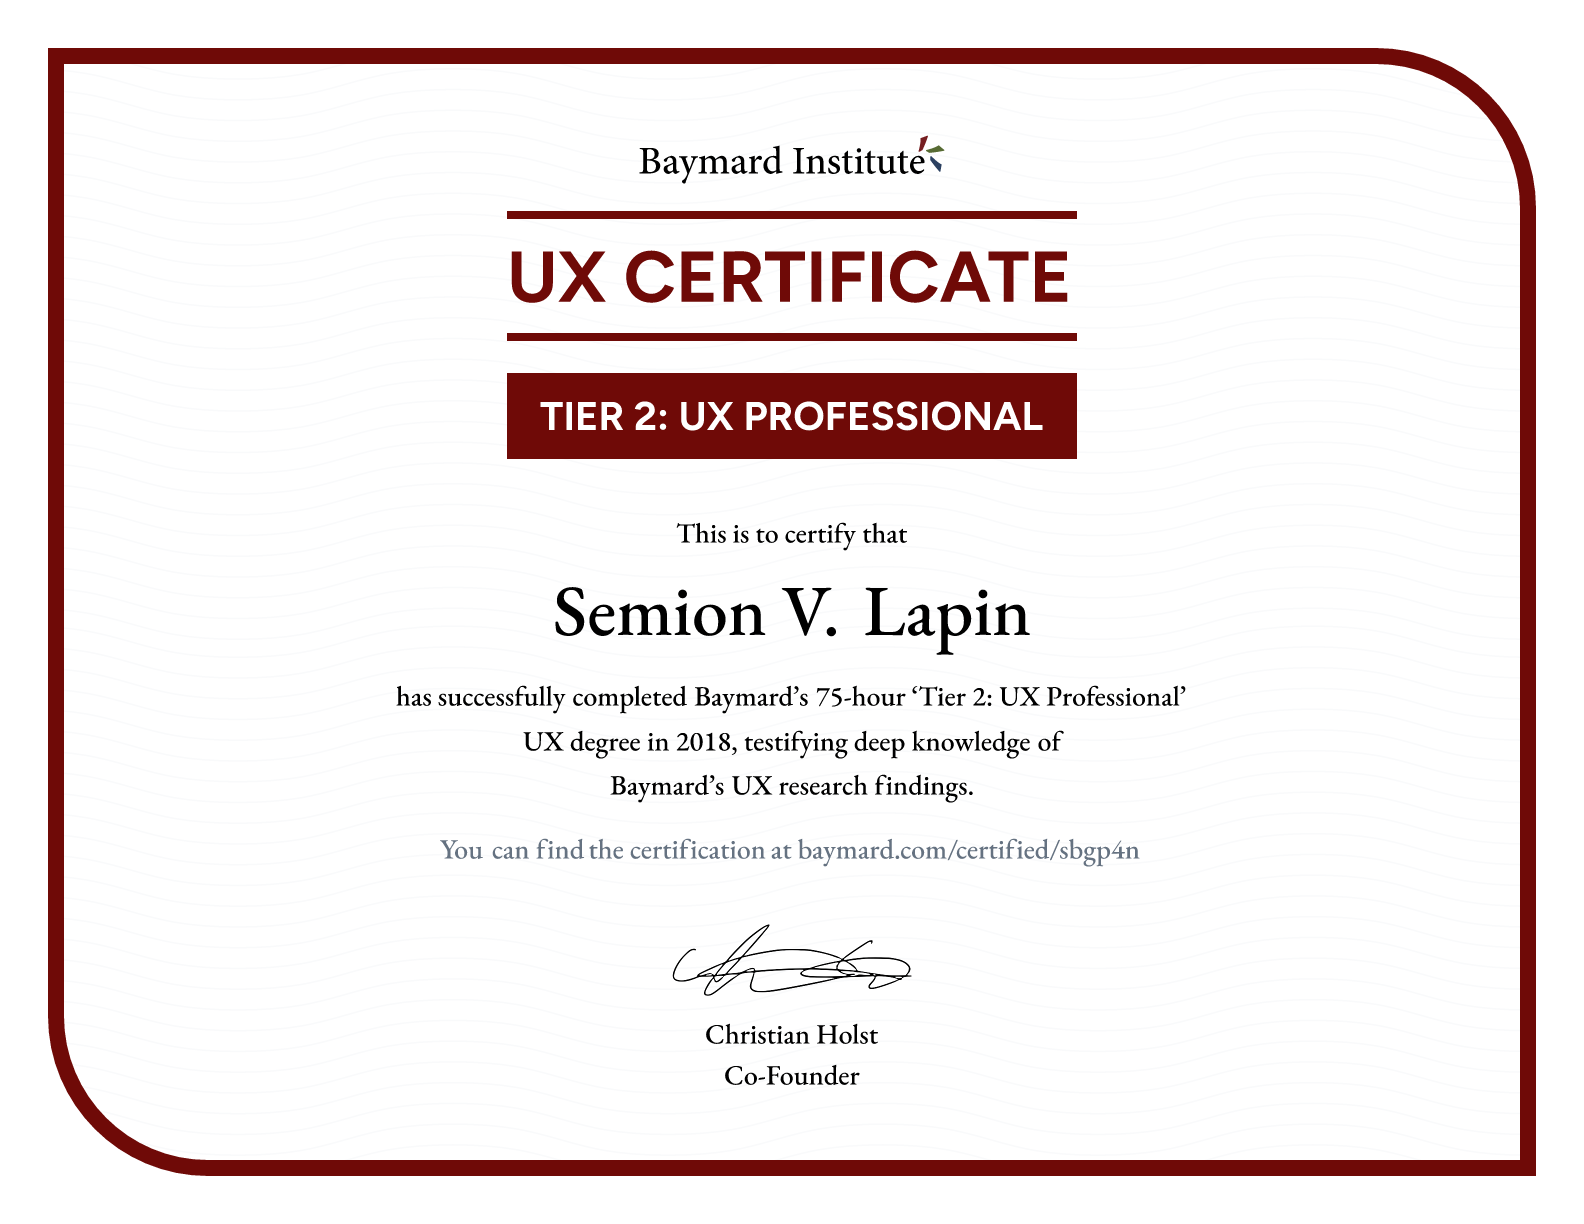 Semion V. Lapin’s certificate